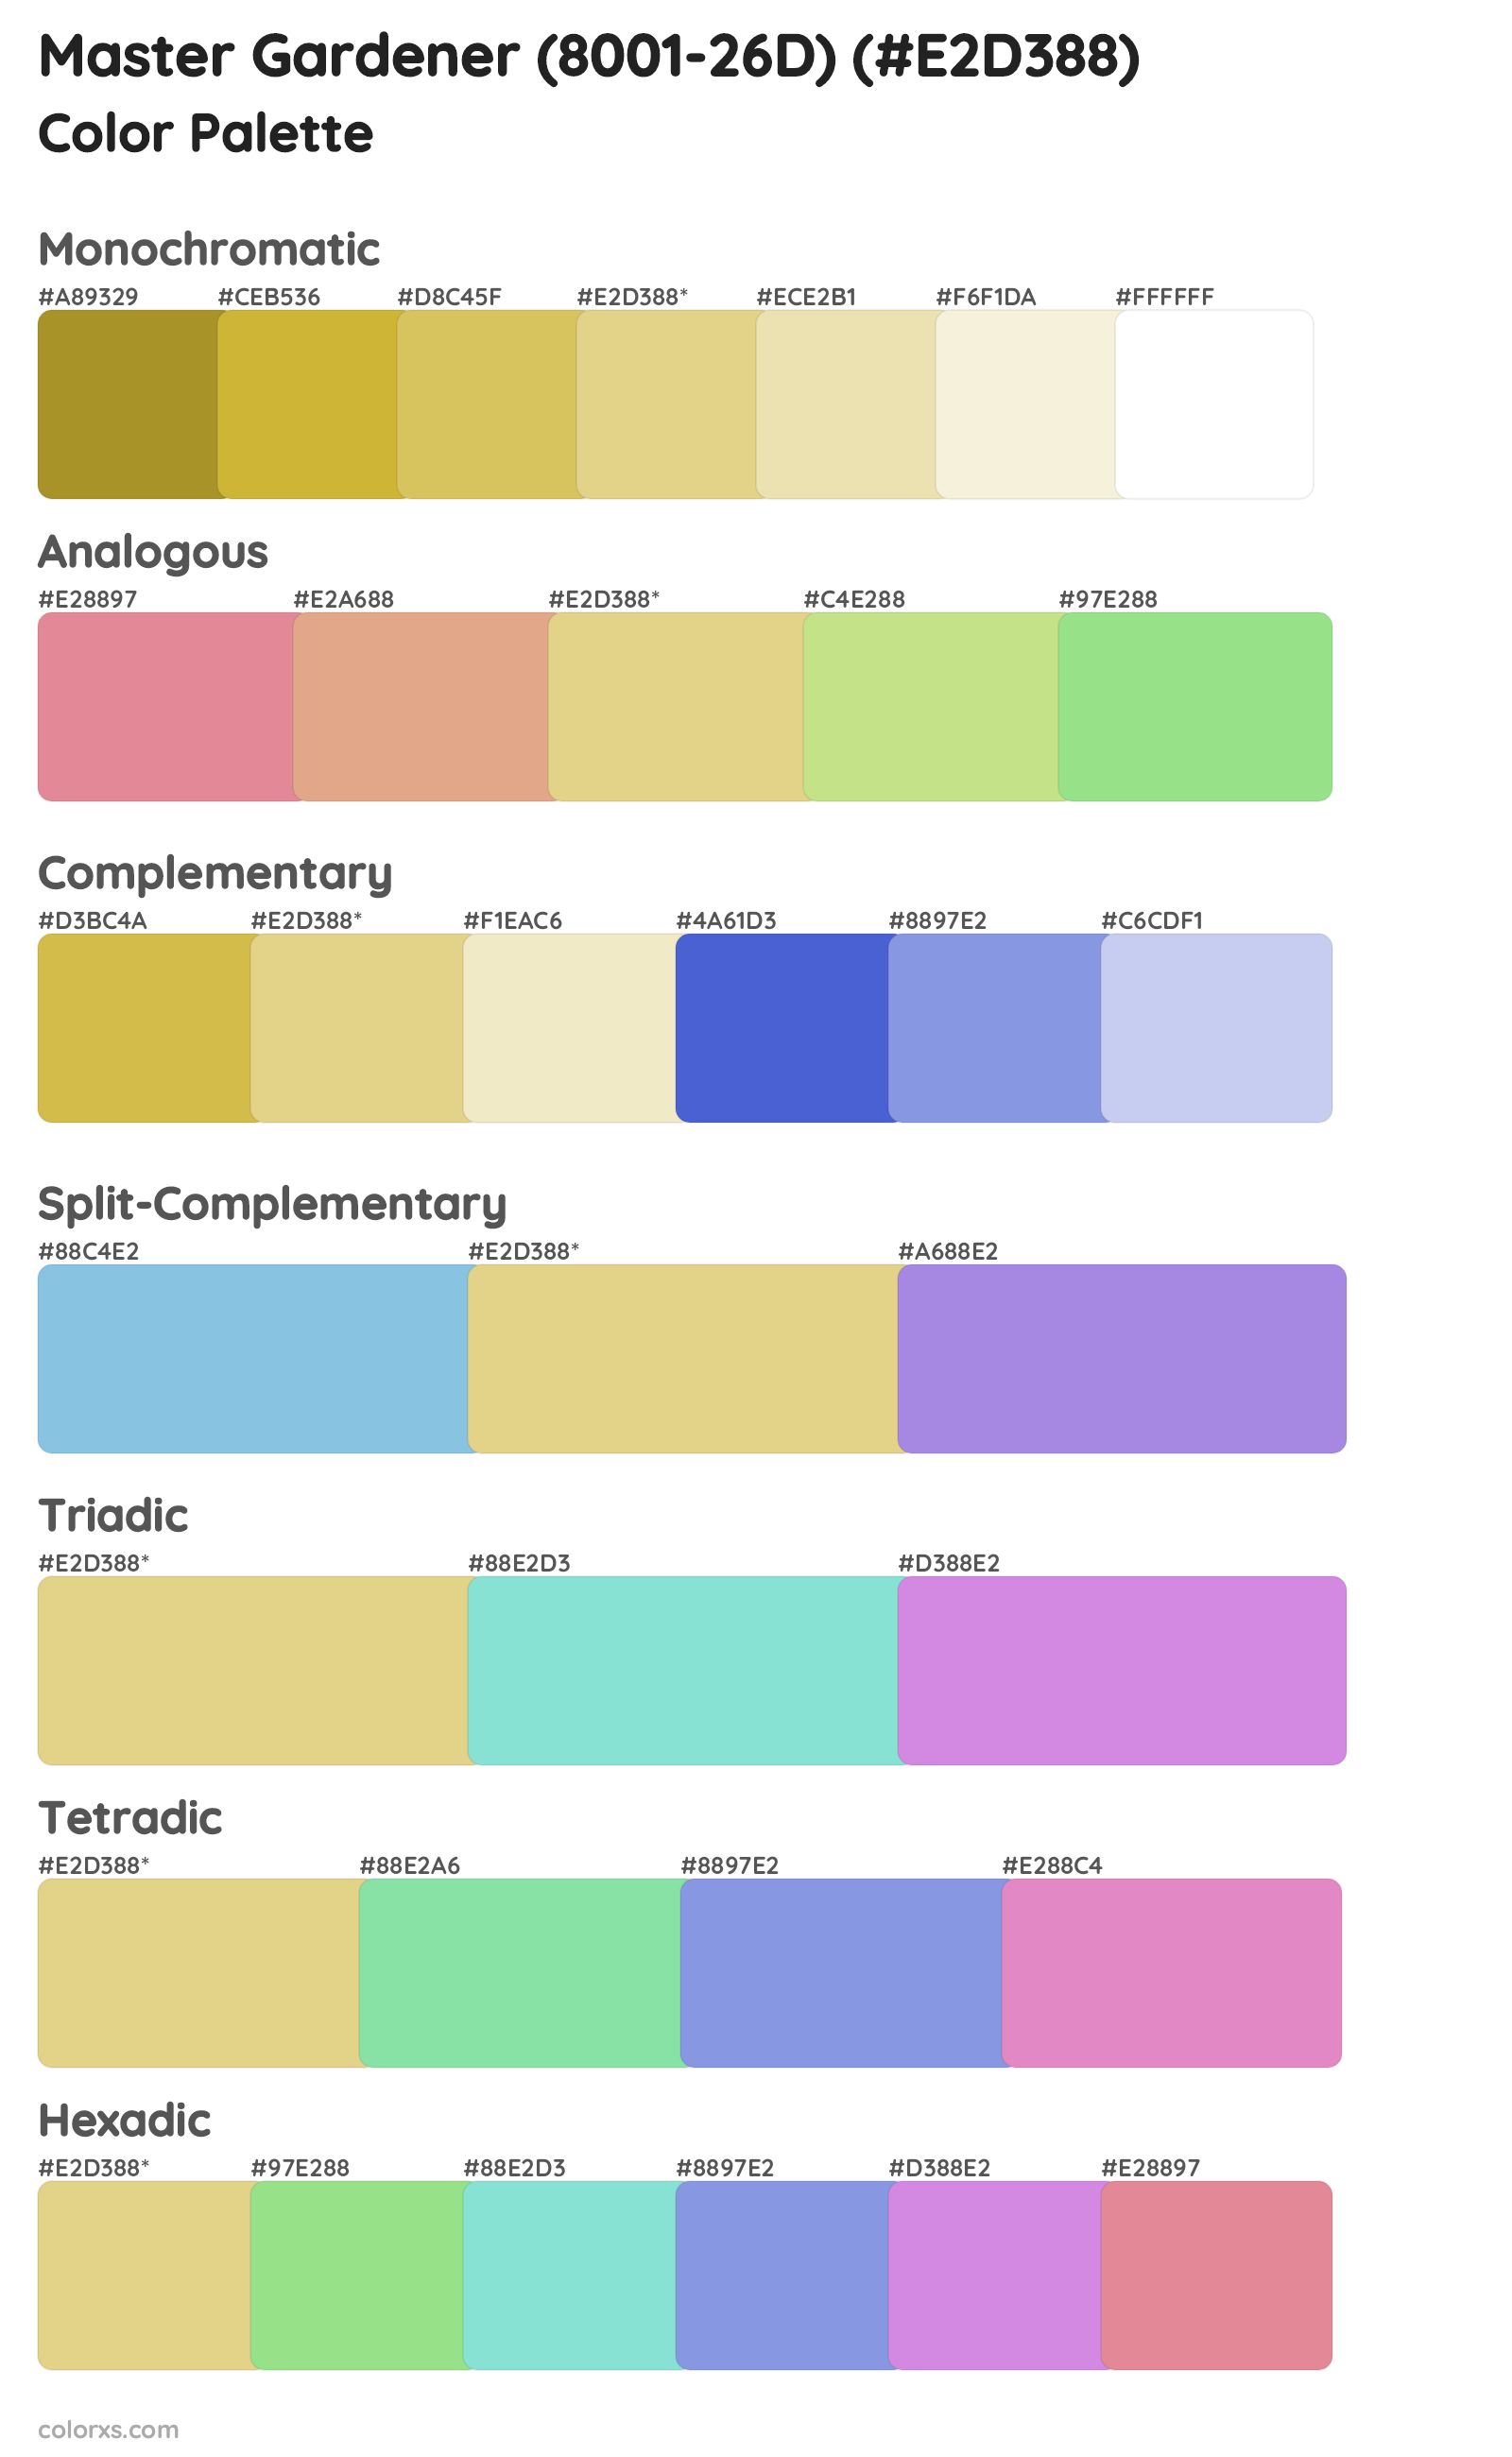 Master Gardener (8001-26D) Color Scheme Palettes